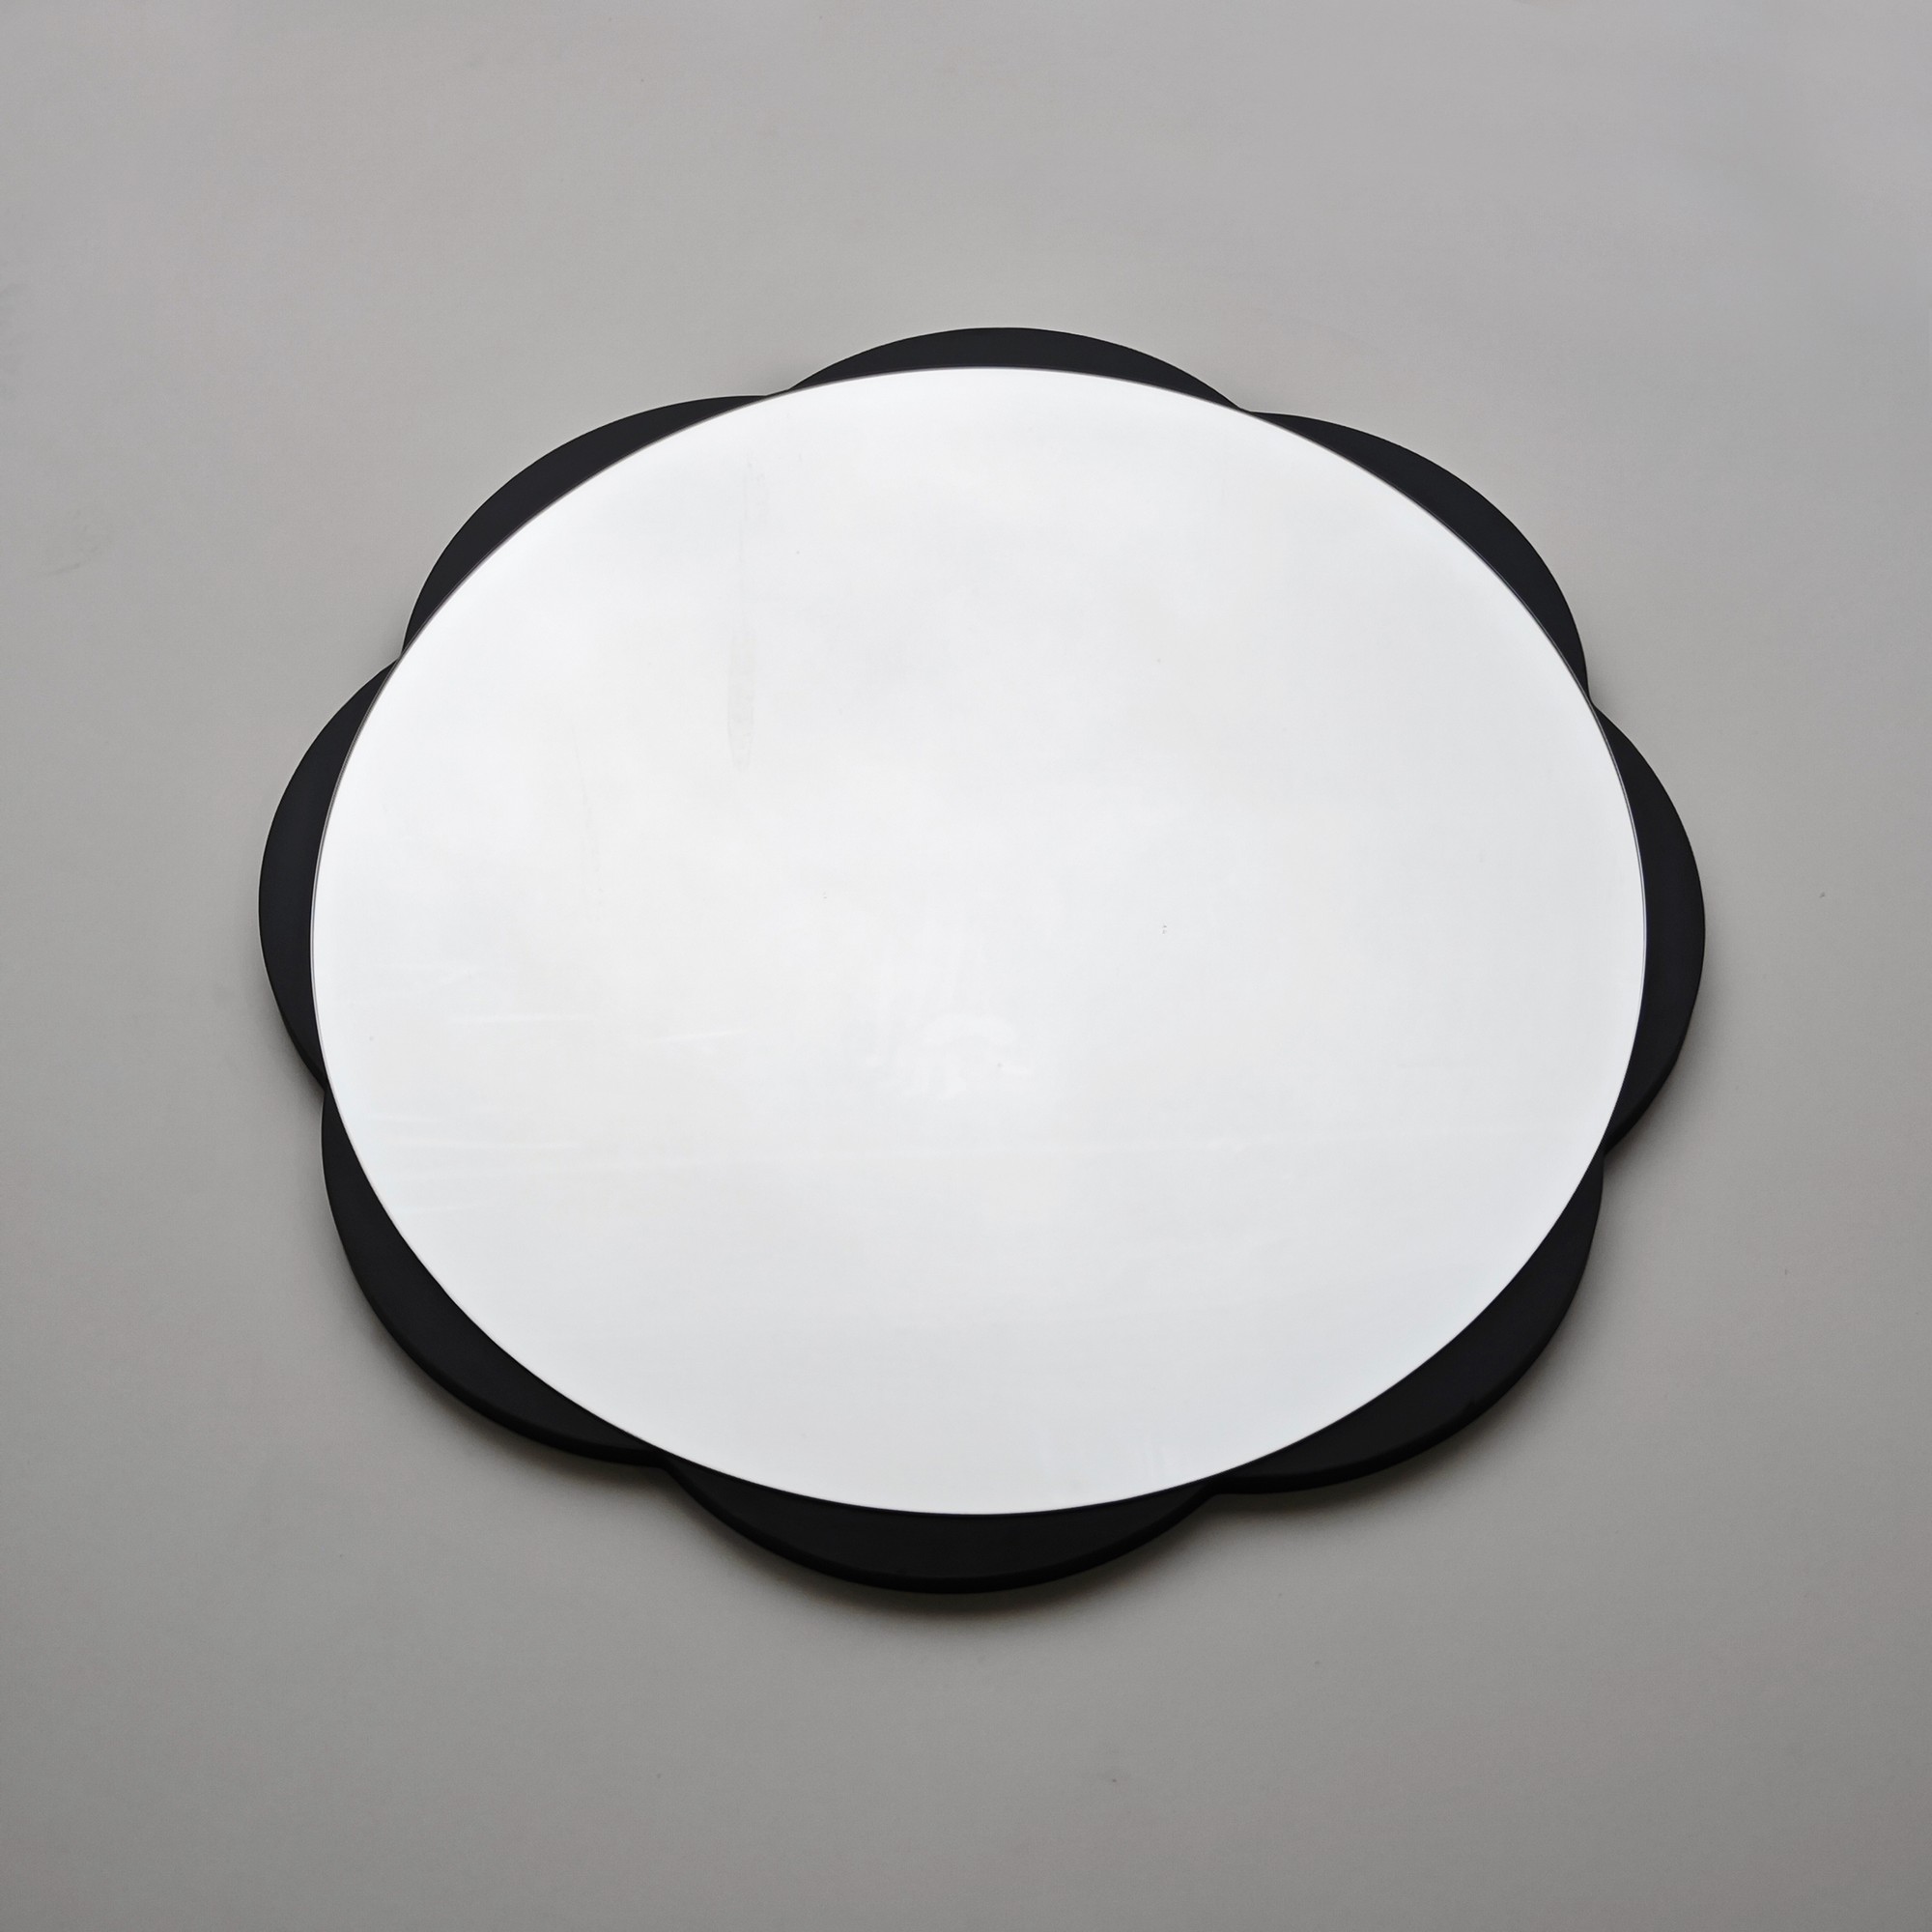 NORDVÄRK Fiore vægspejl, rund - spejlglas og sort melamin (Ø65)